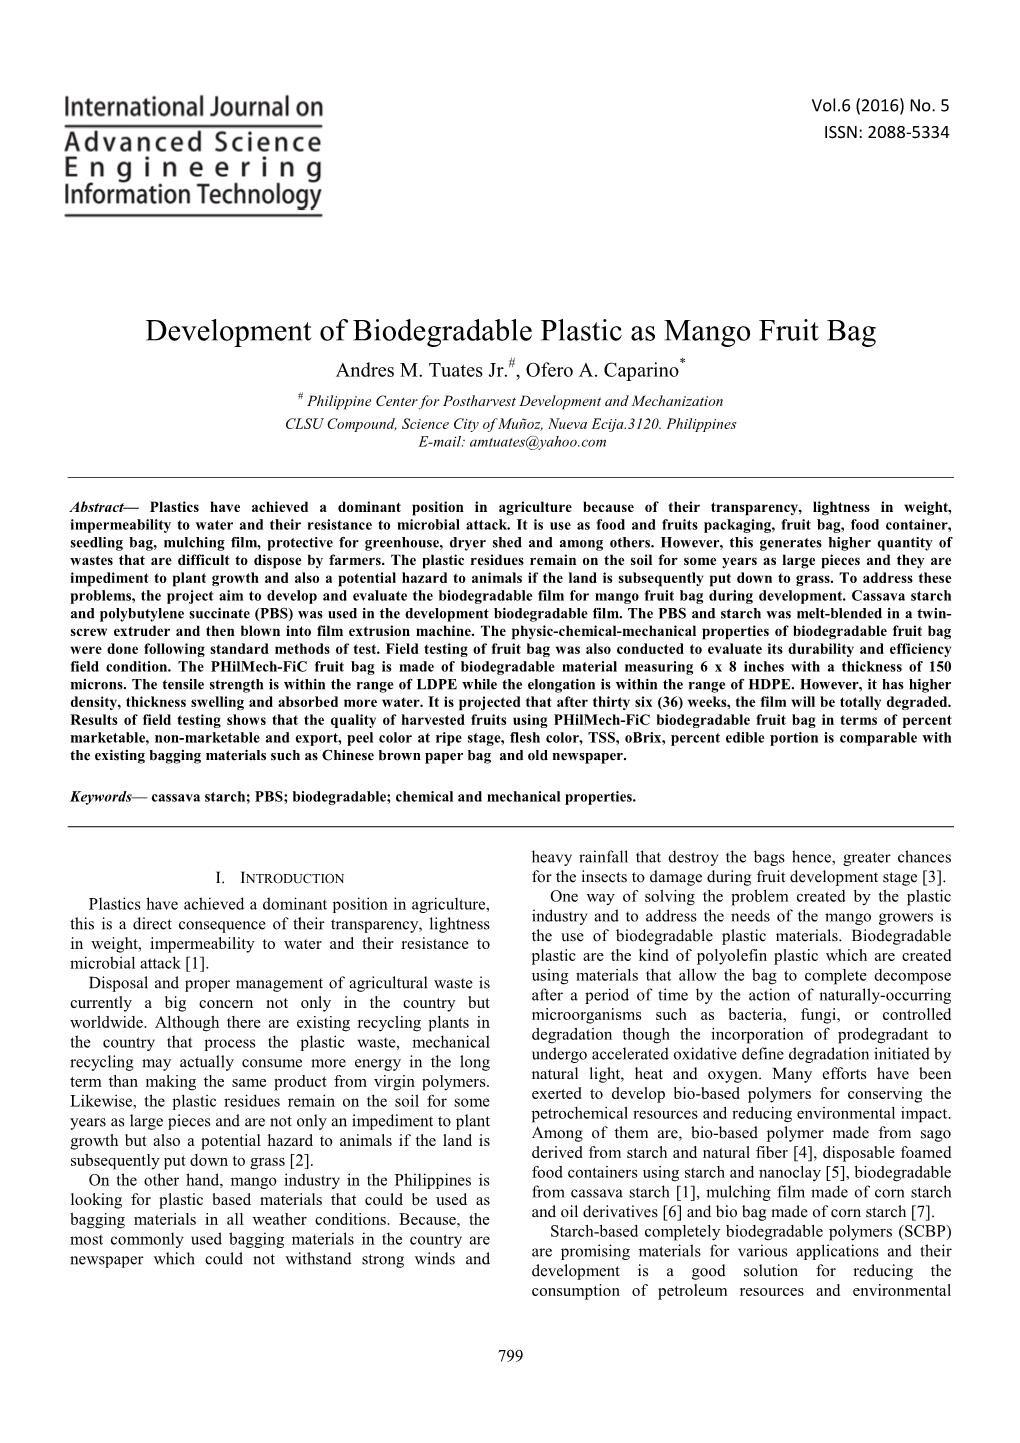 Development of Biodegradable Plastic As Mango Fruit Bag Andres M